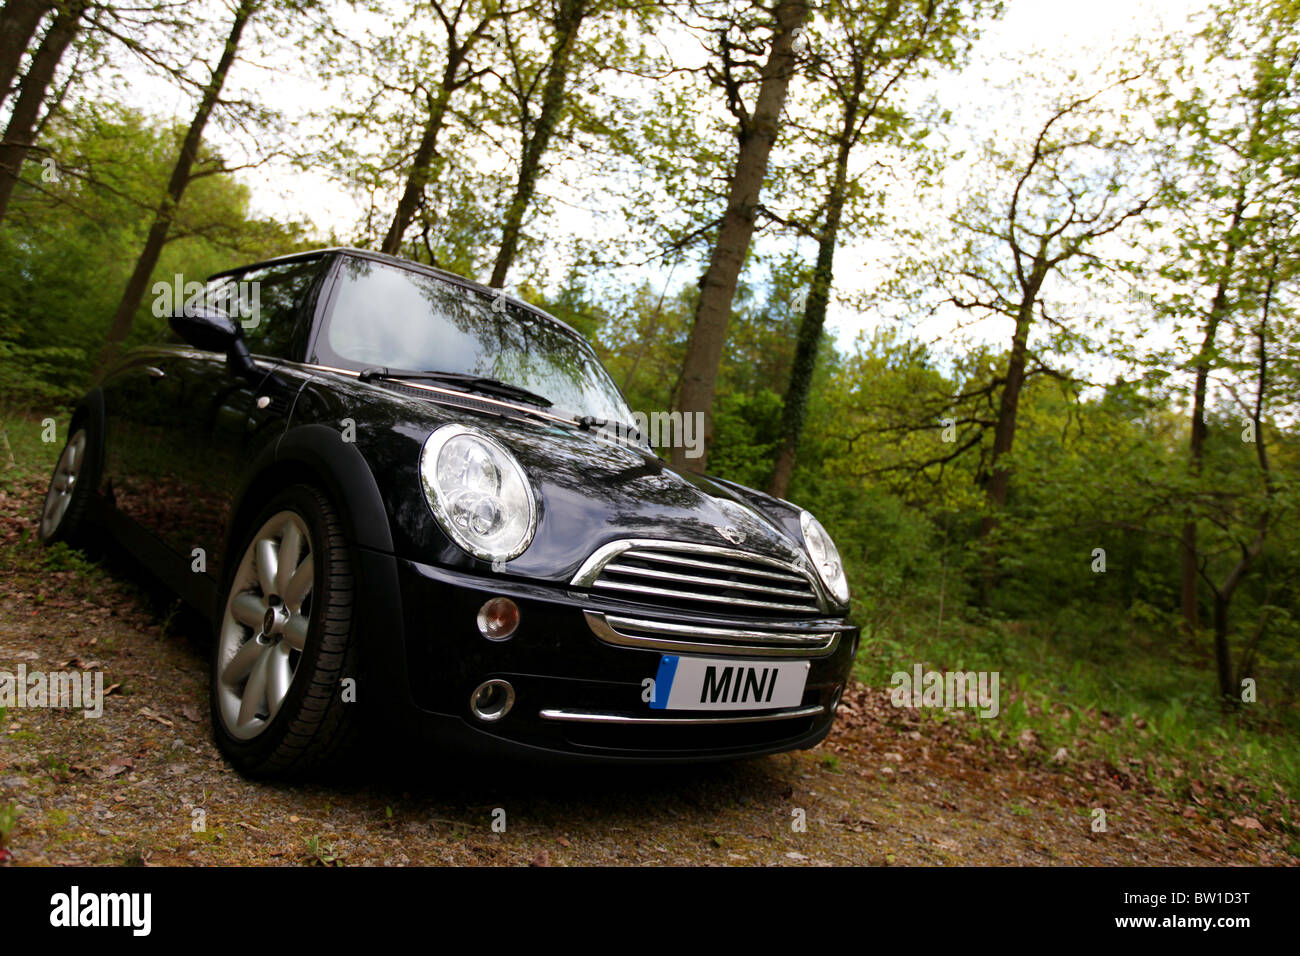 2005, black Mini Cooper Hatch car Stock Photo